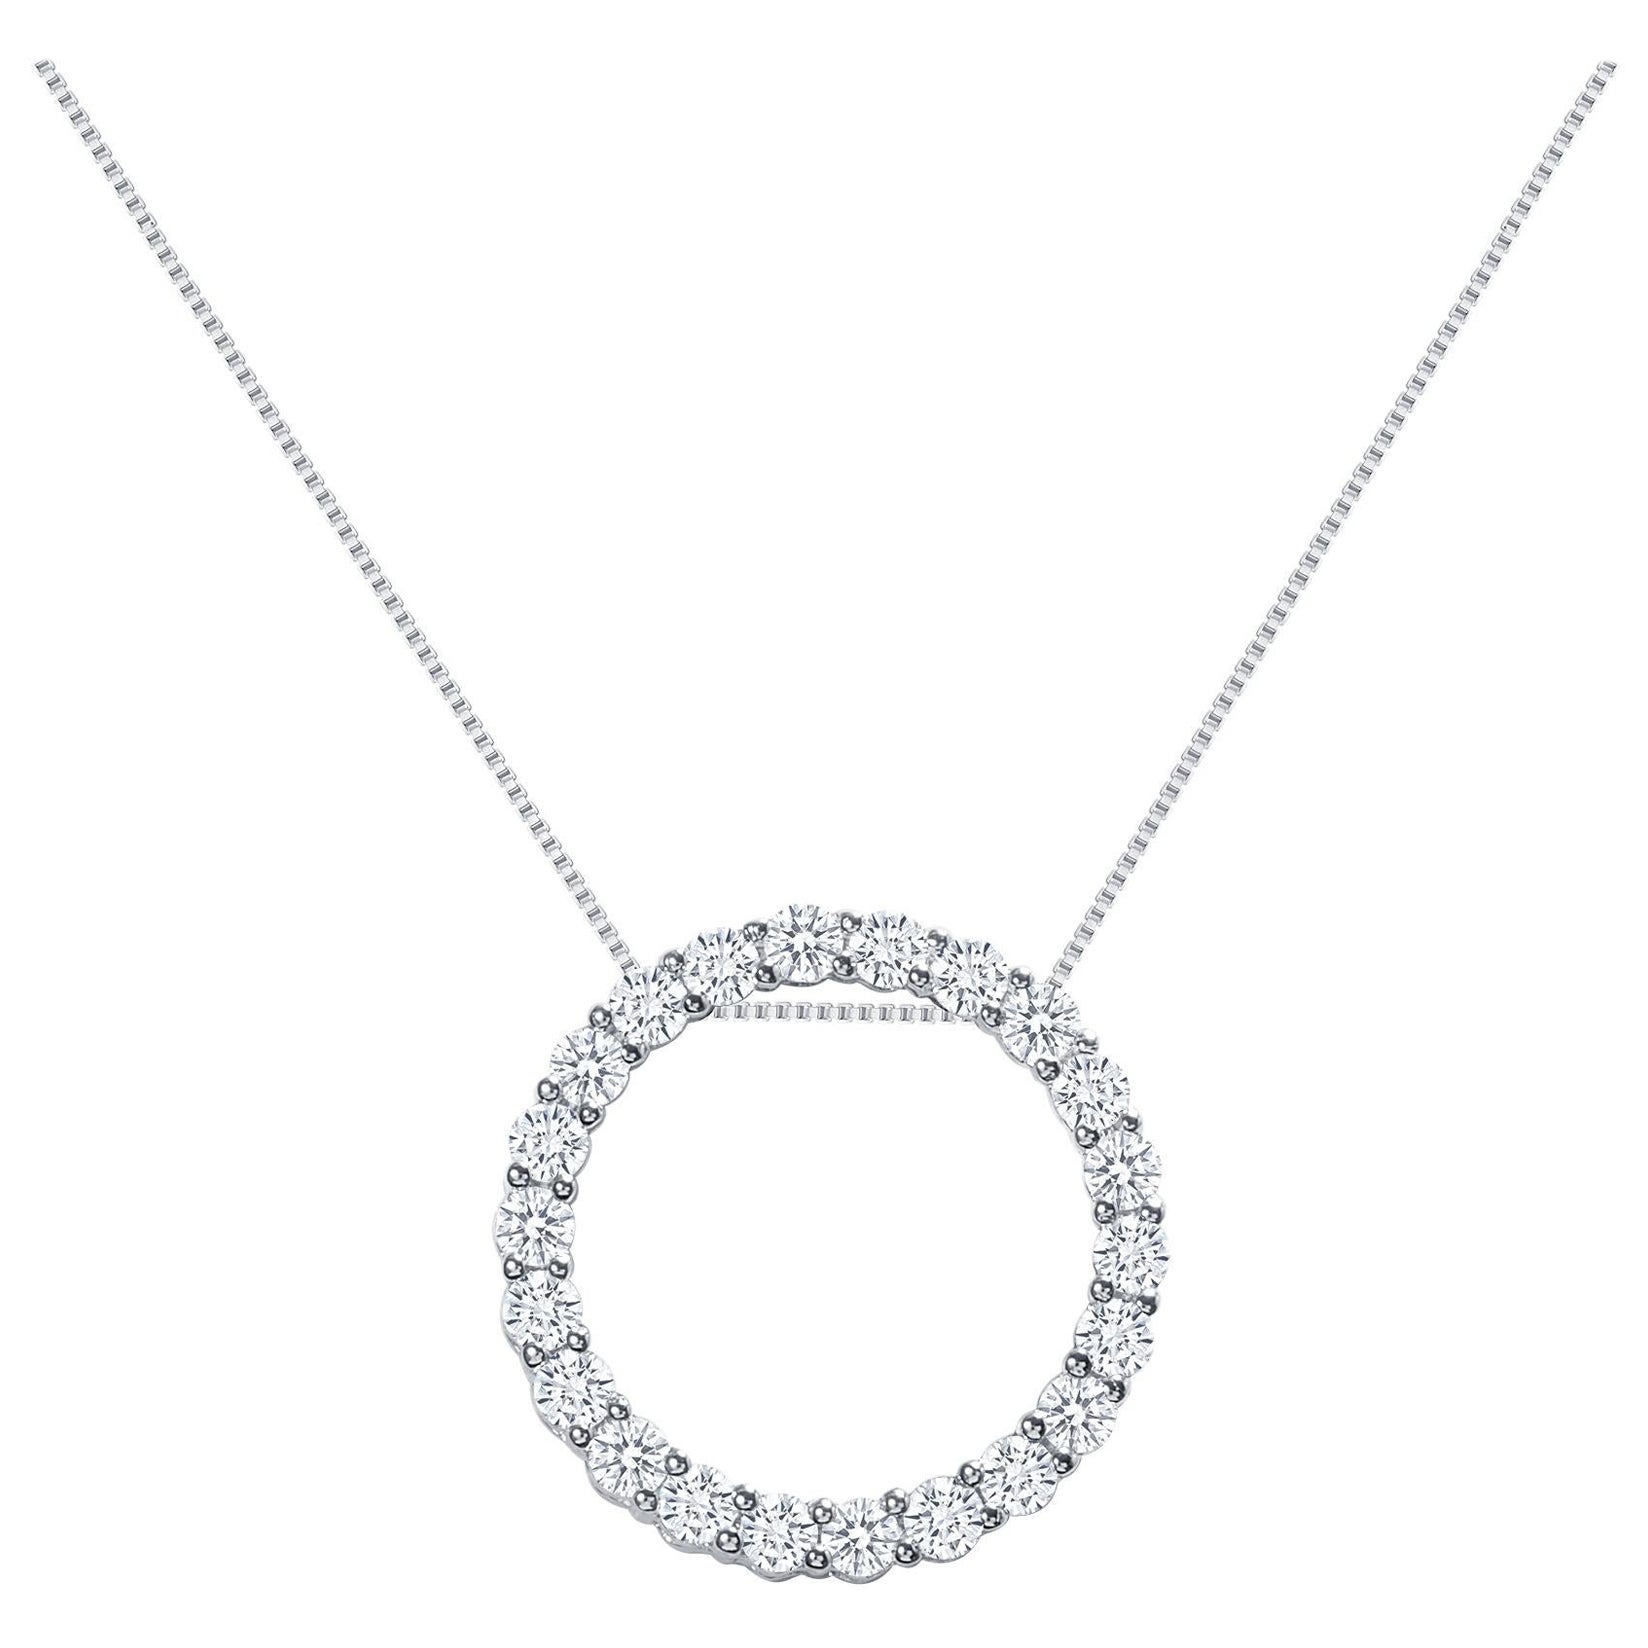 Collier à pendentif circulaire en or blanc 14 carats avec diamants ronds naturels de 2 carats